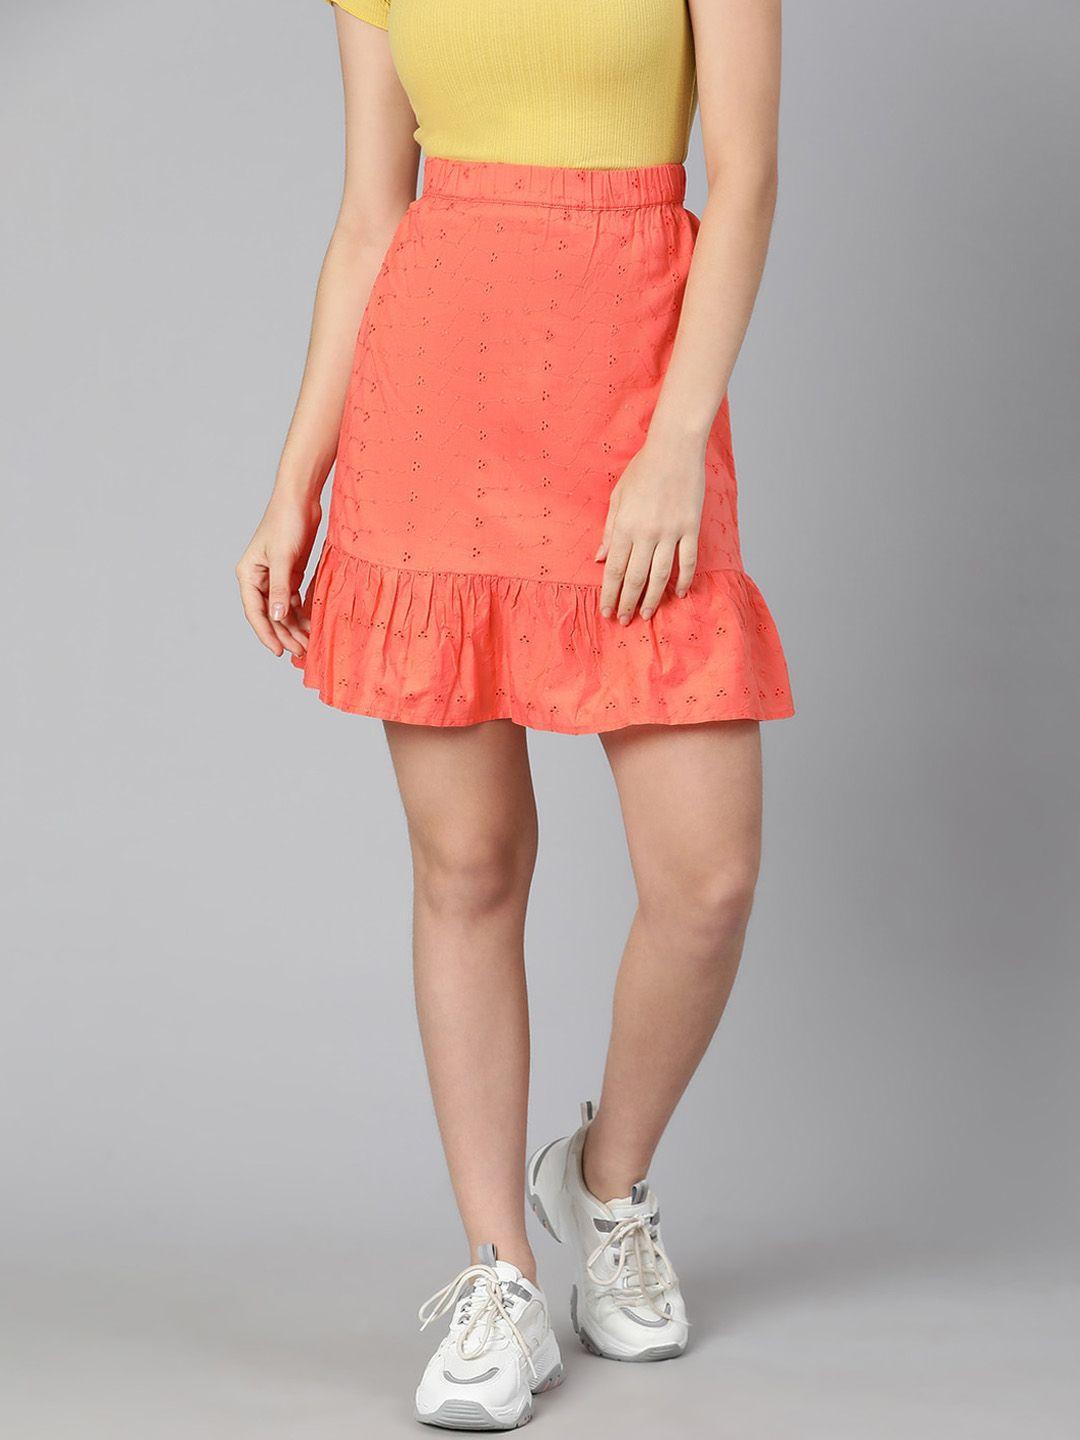 oxolloxo-women-orange-embroidered-flared-mini-skirt